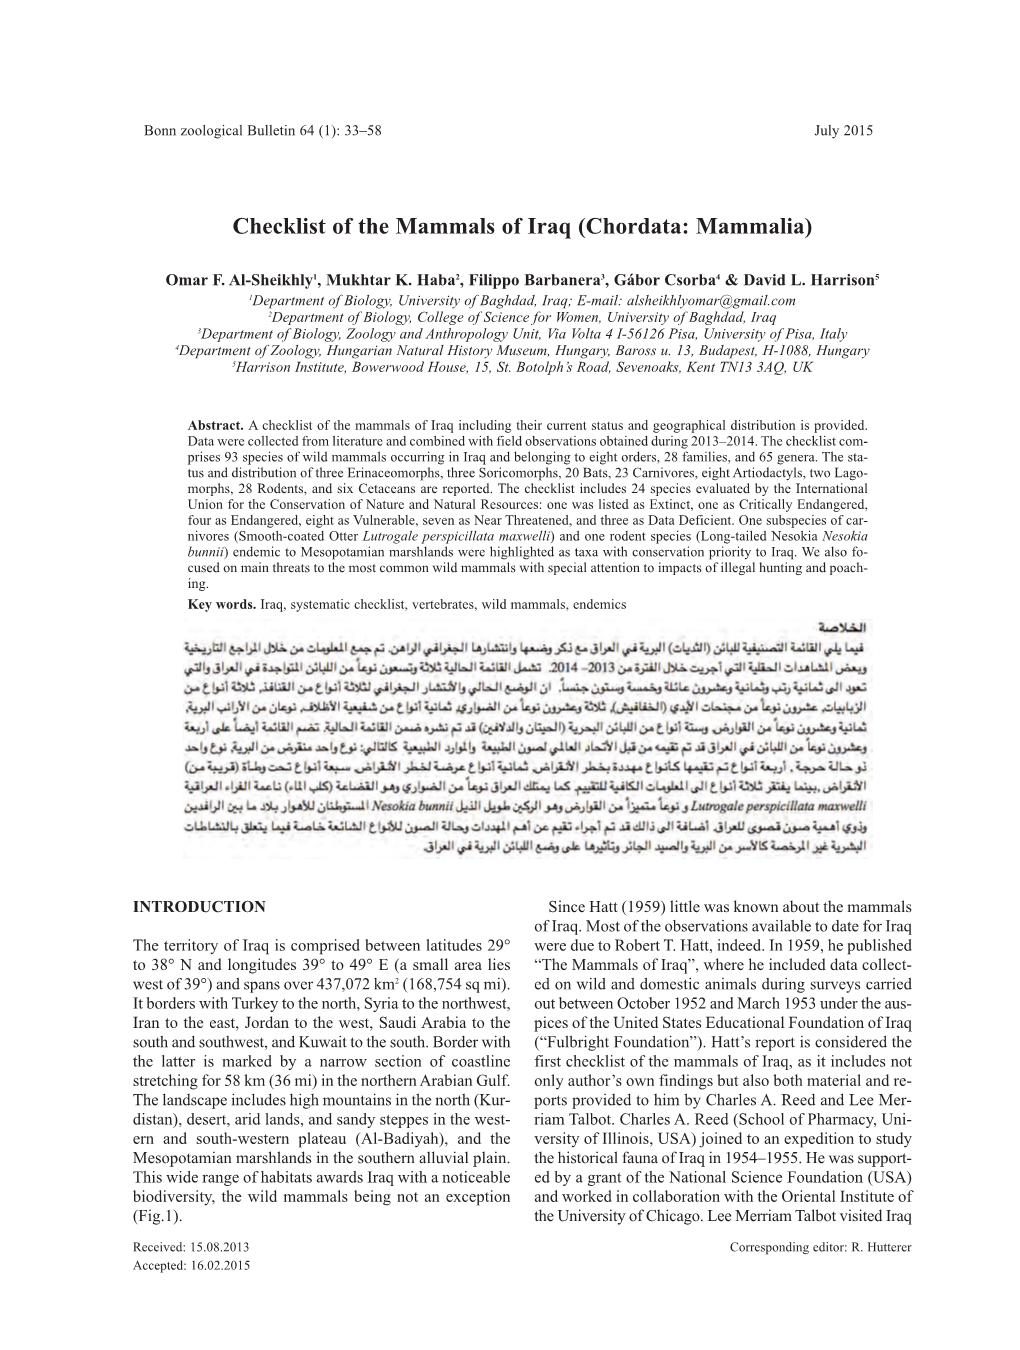 Checklist of the Mammals of Iraq ( Chordata : Mammalia)